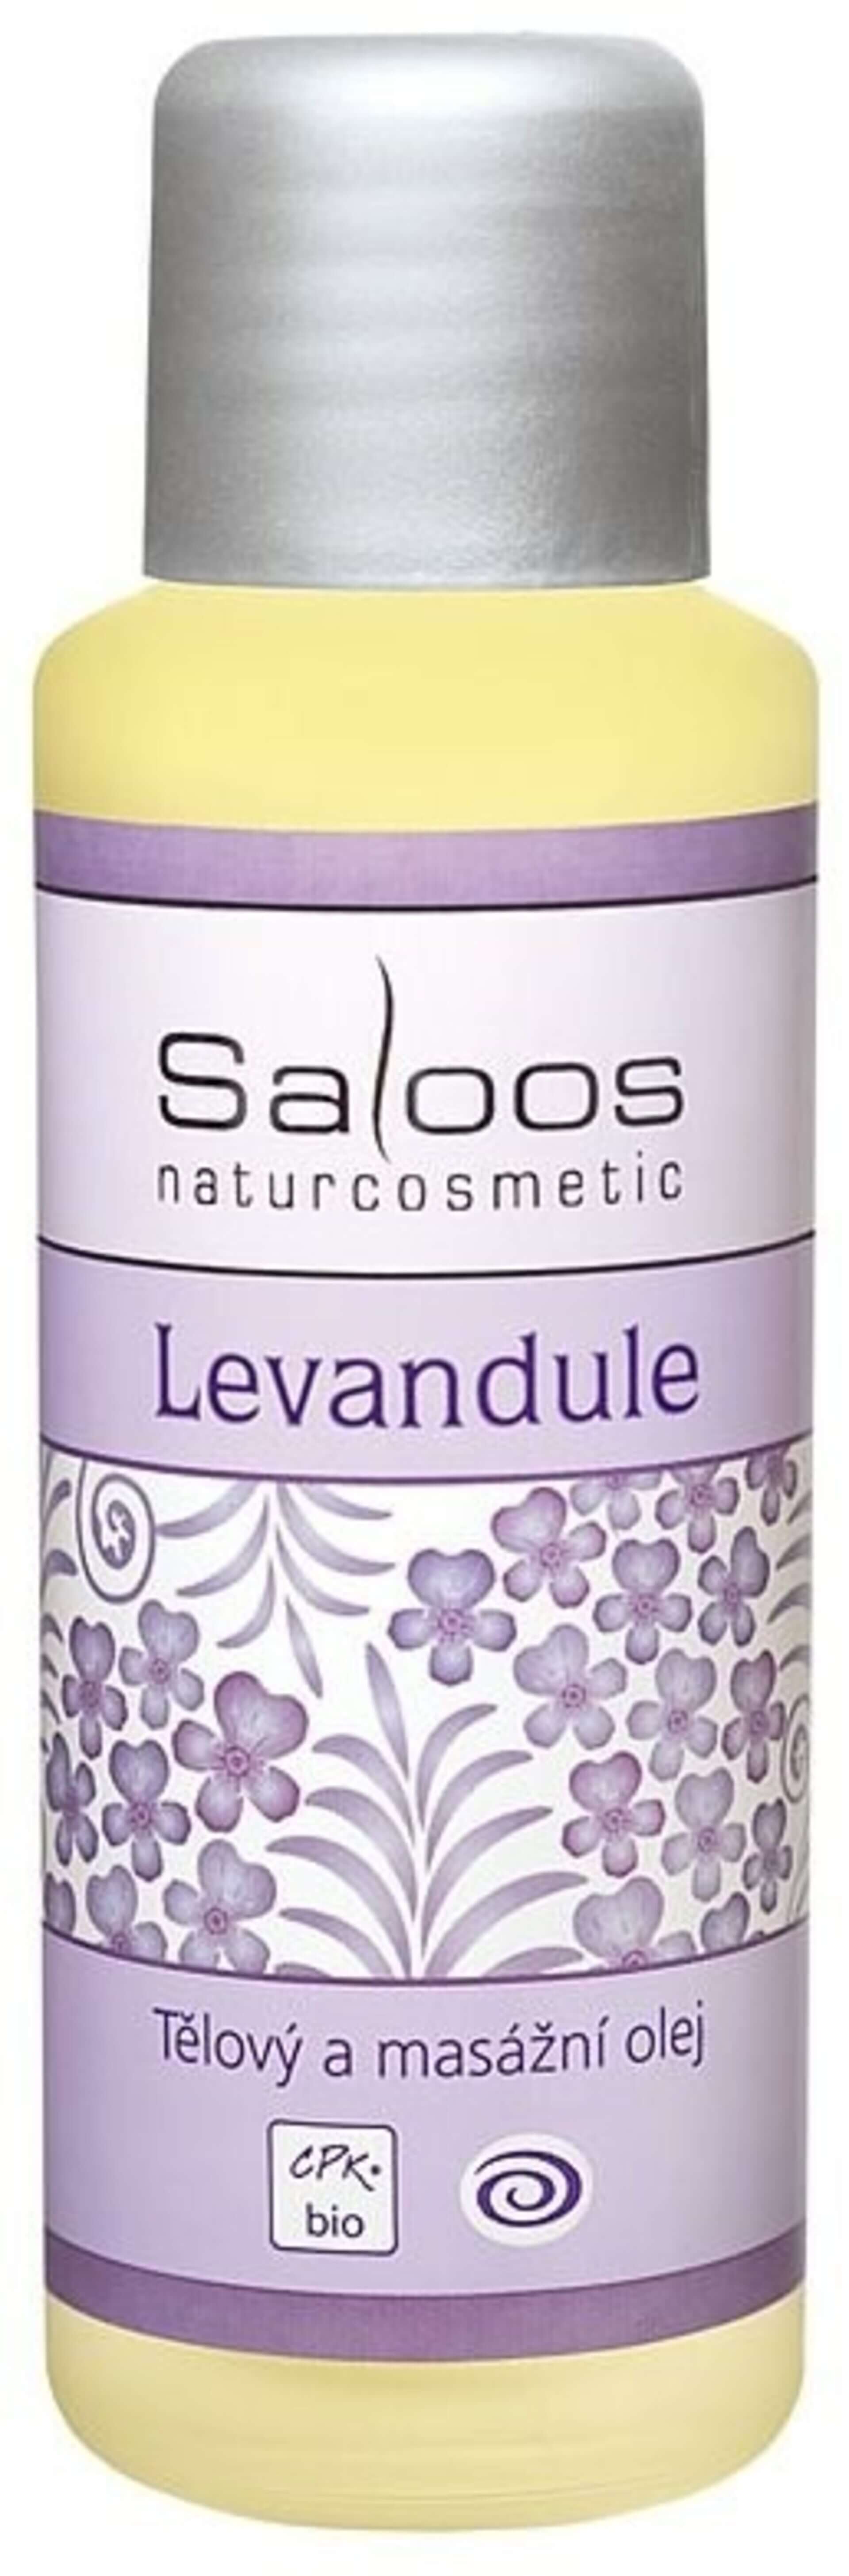 E-shop Saloos olej masážny LEVANDULA - MO 50 ml